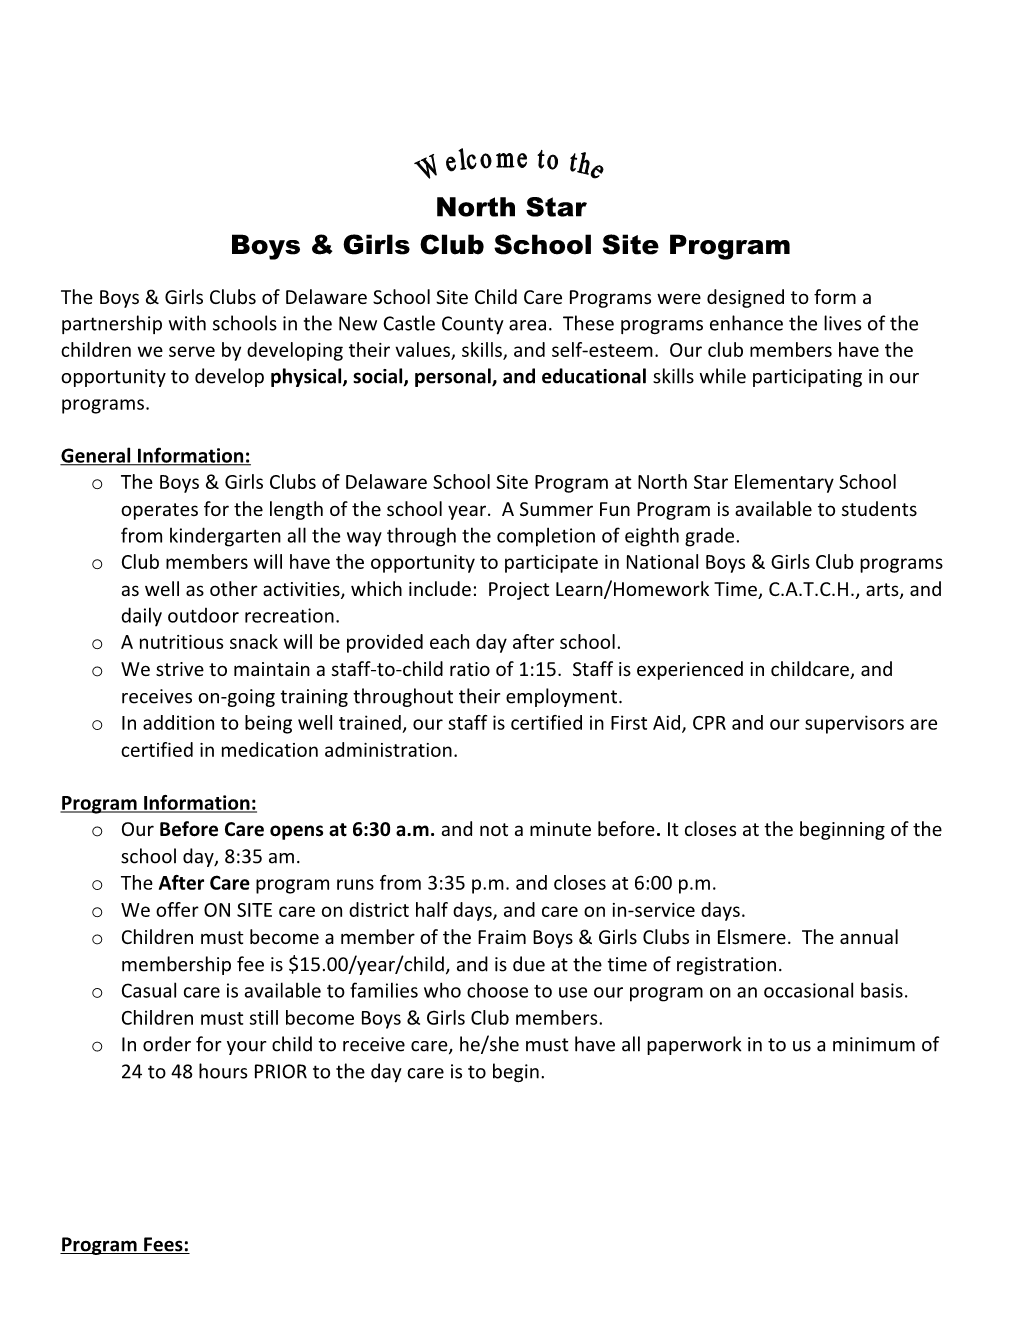 Boys & Clubs of Delaware School Site Program